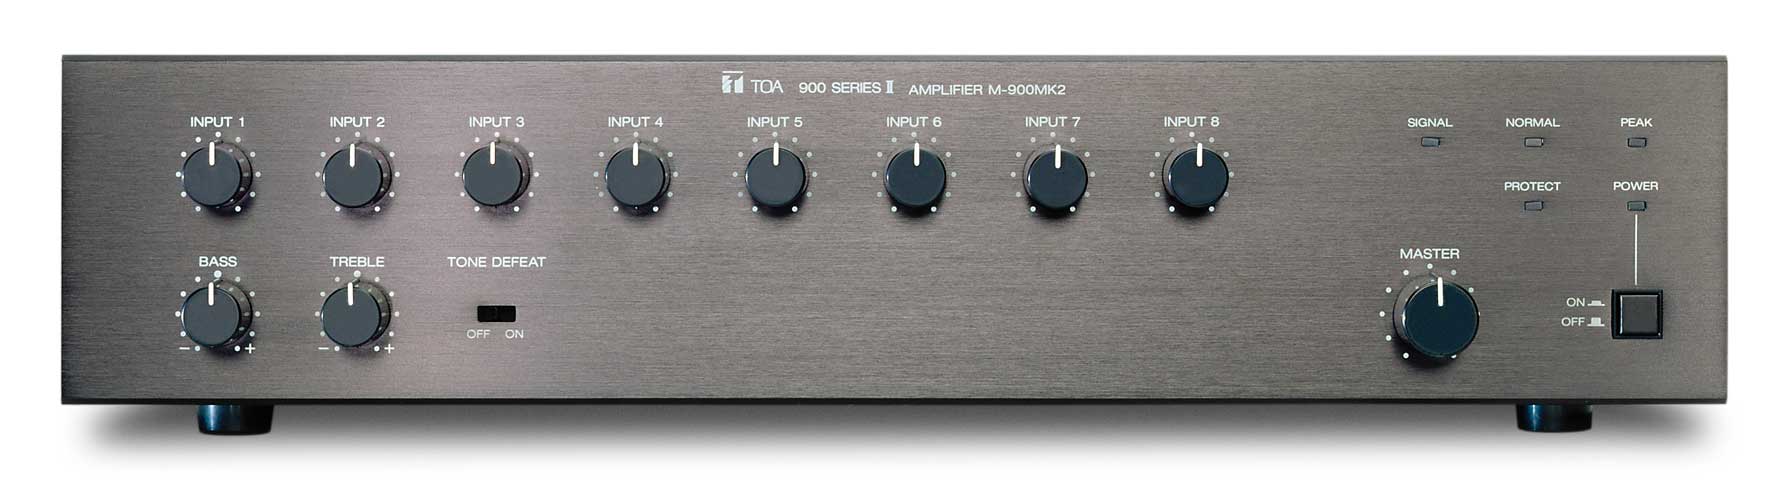 serie-900-amplificadores